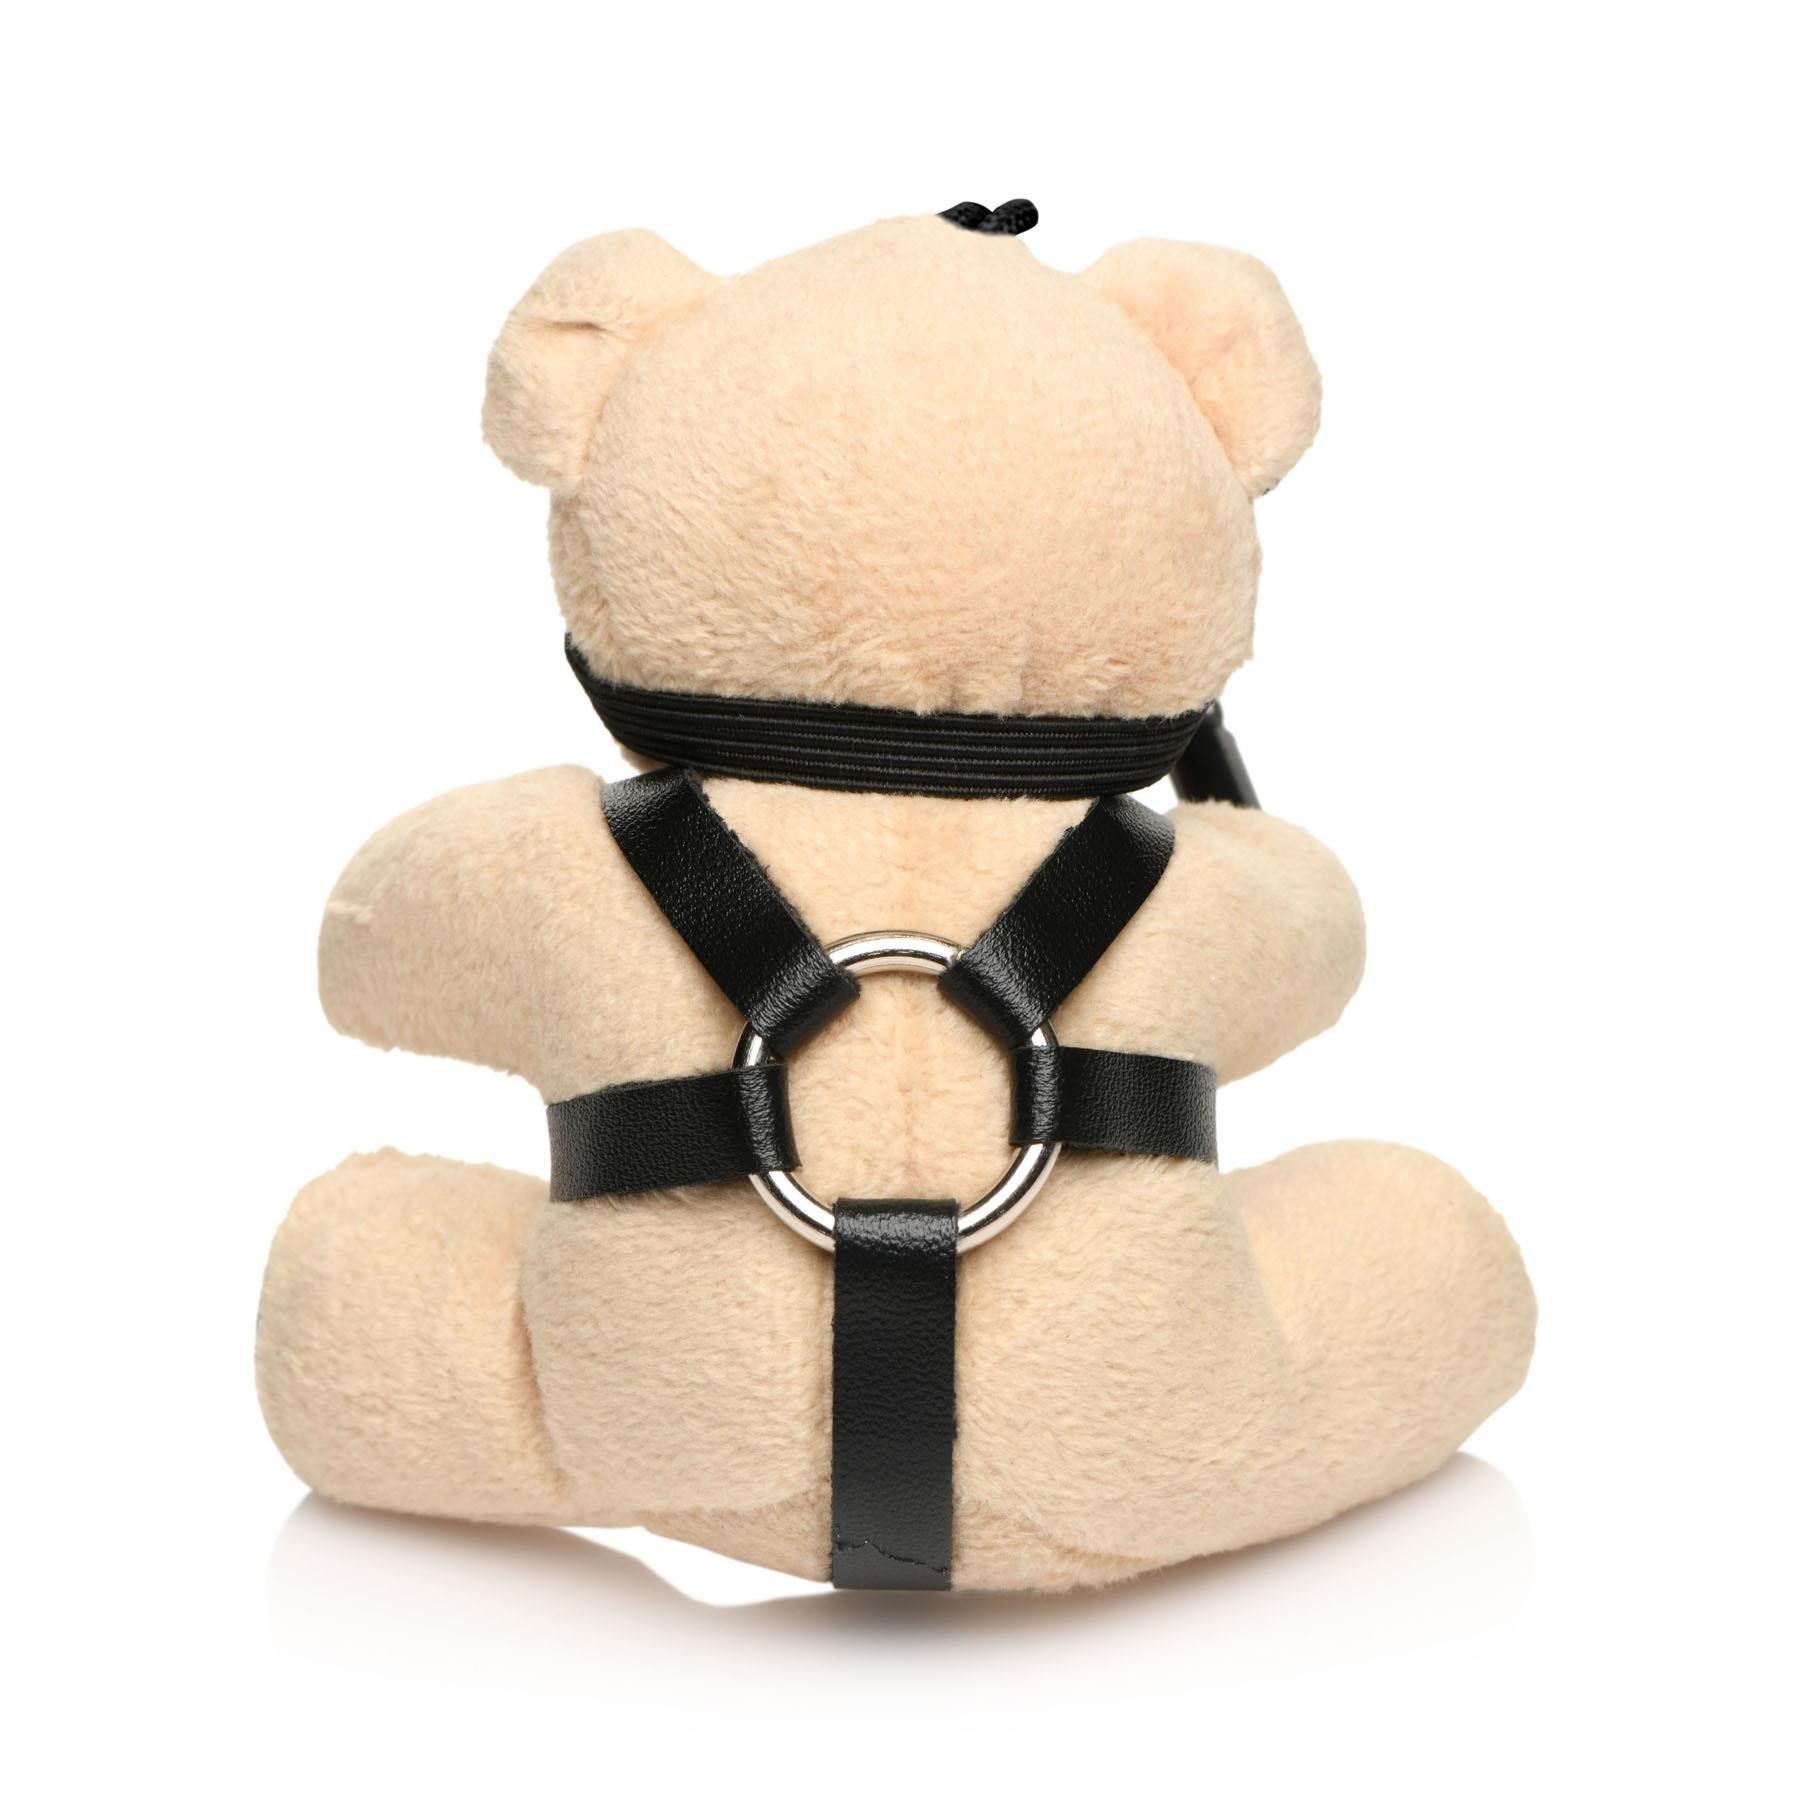 Master Series BDSM Teddy Bear Keychain - Product Shot - Back